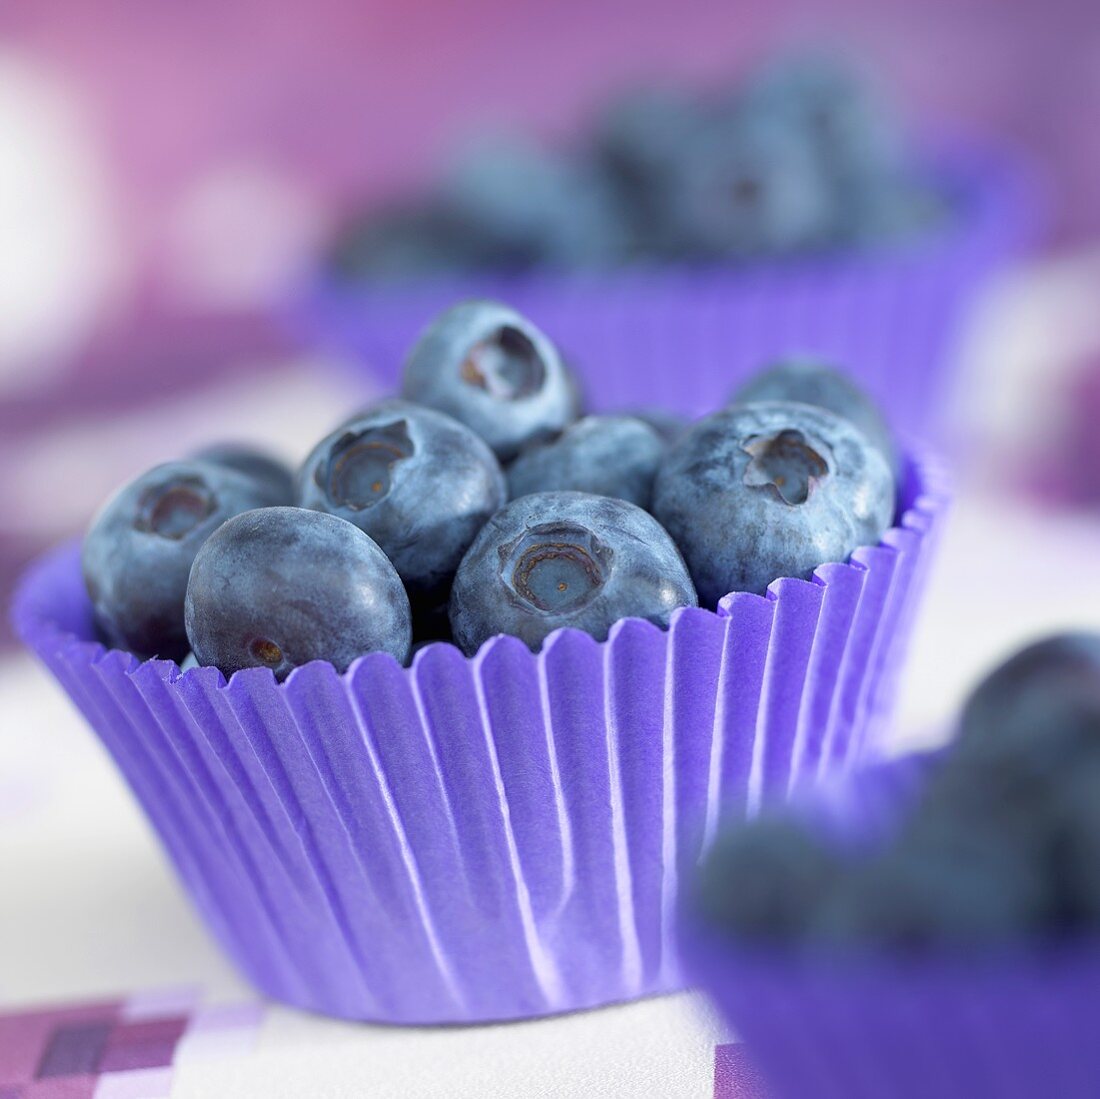 Blue berries in muffin cups